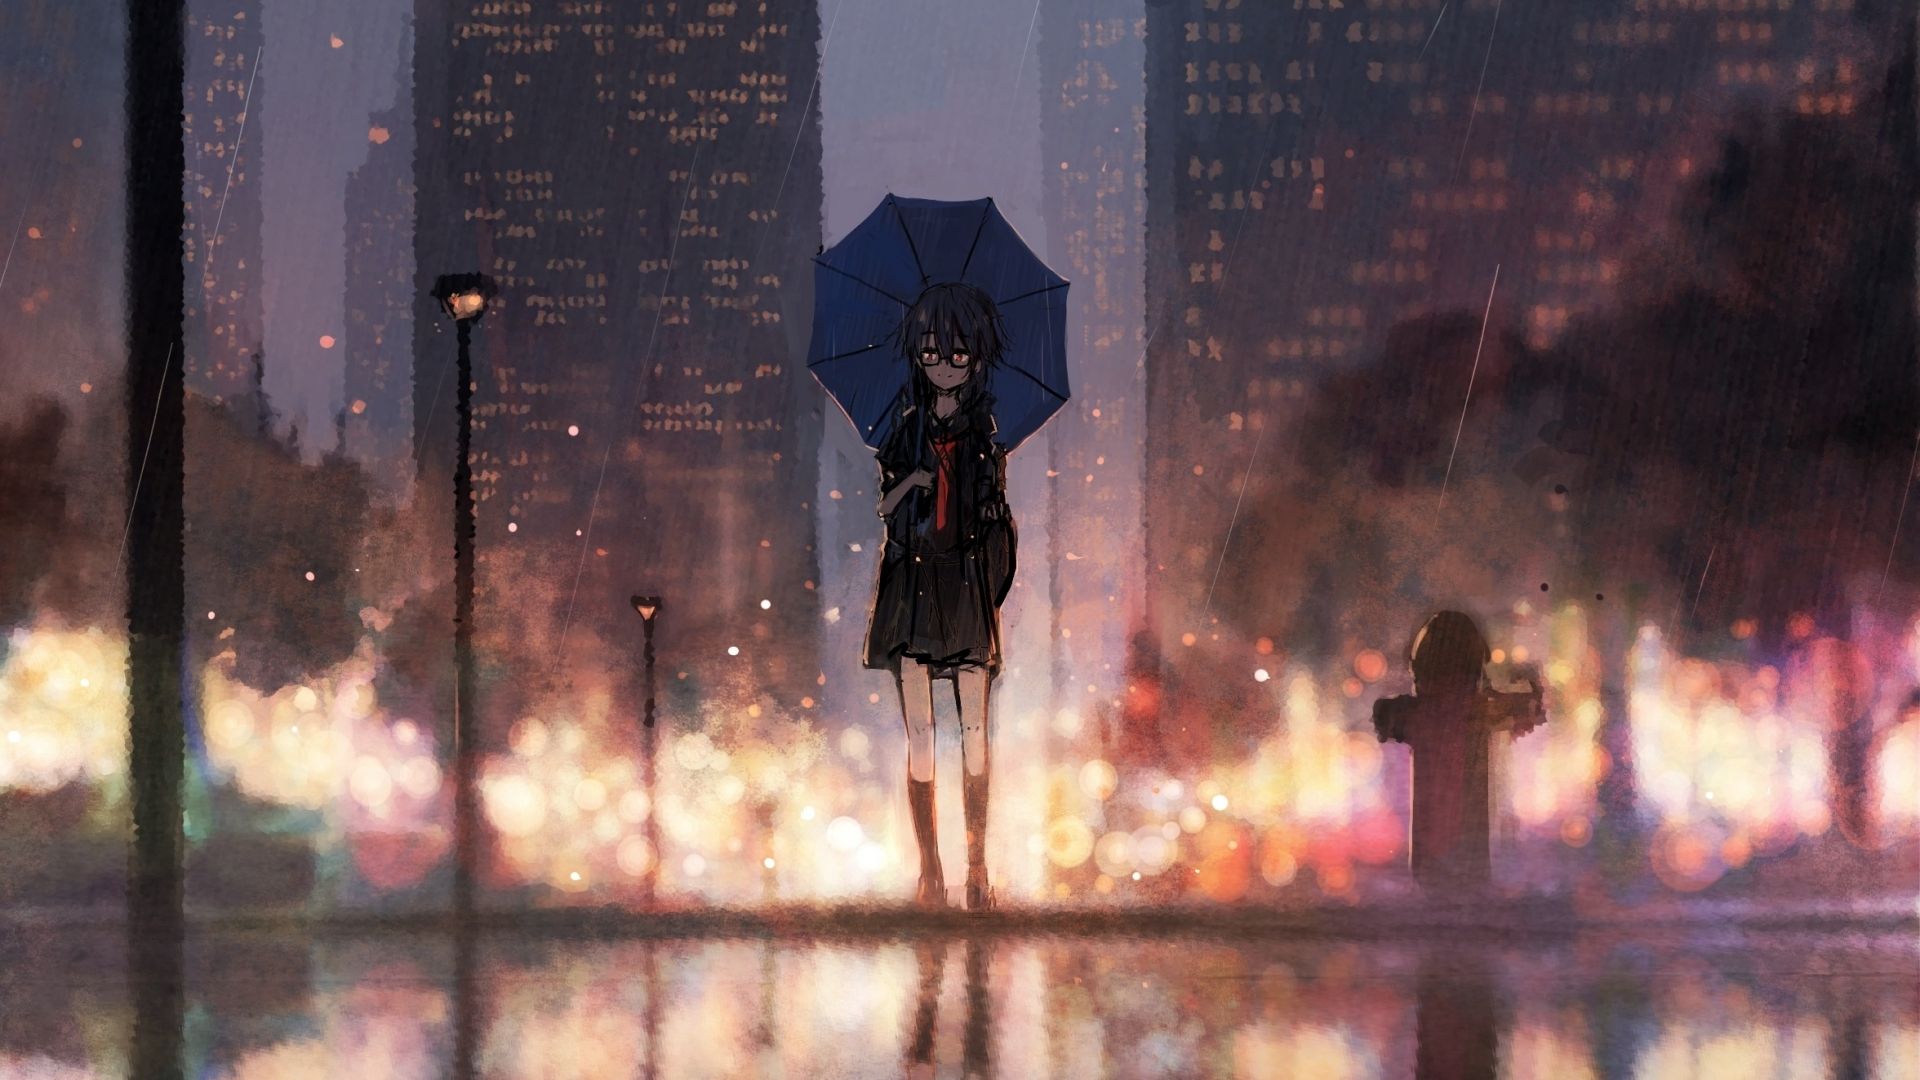 Download 1920x1080 wallpaper girl, anime, outdoor, rain, cityscape, original, full hd, hdtv, fhd, 1080p, 1920x1080 HD image, background, 16683